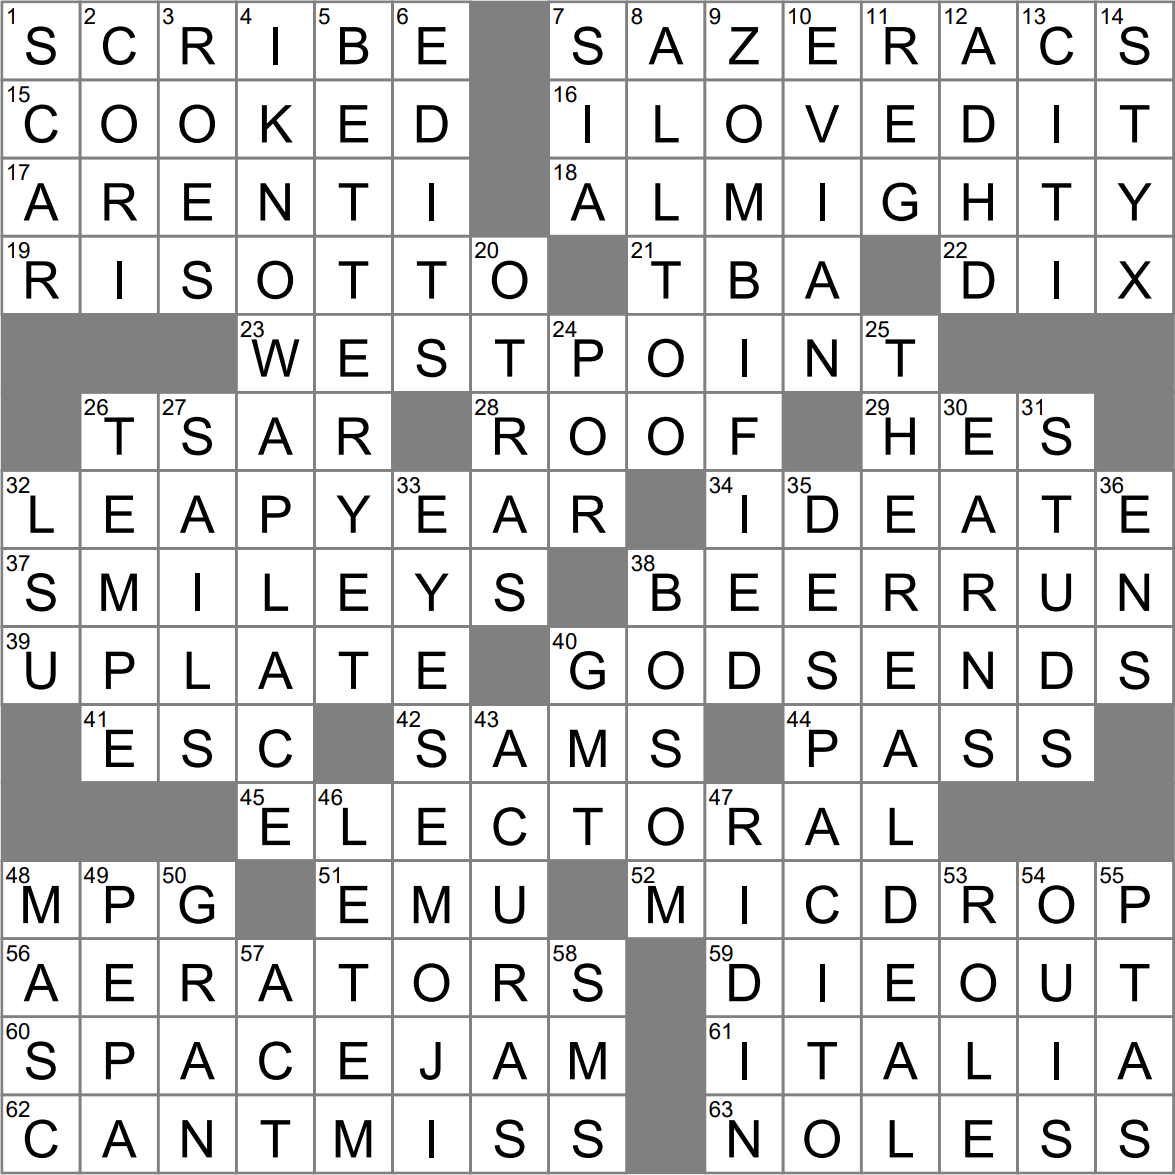 LA Times Crossword 8 Apr 23 Saturday LAXCrossword com